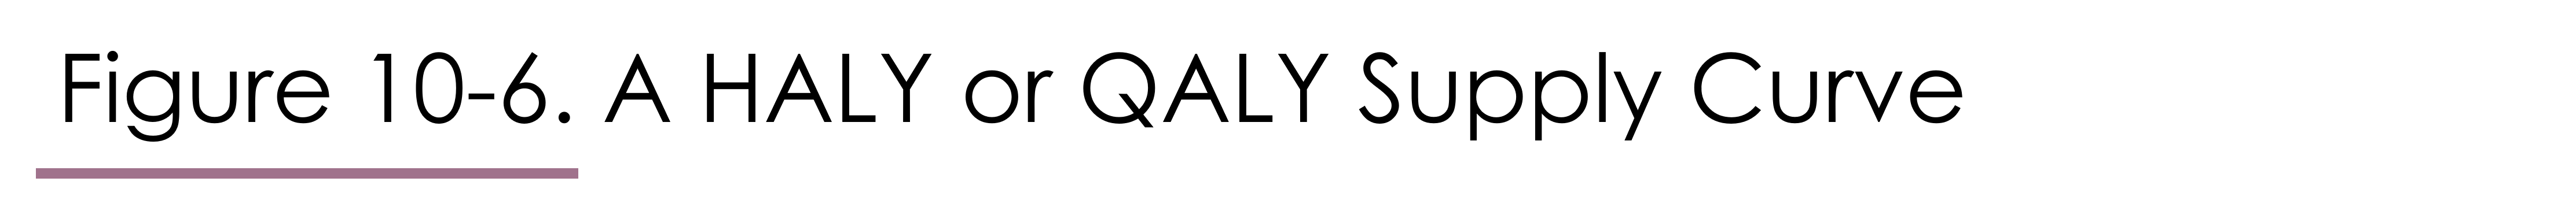 Figure 10-6, a HALY Supply Curve